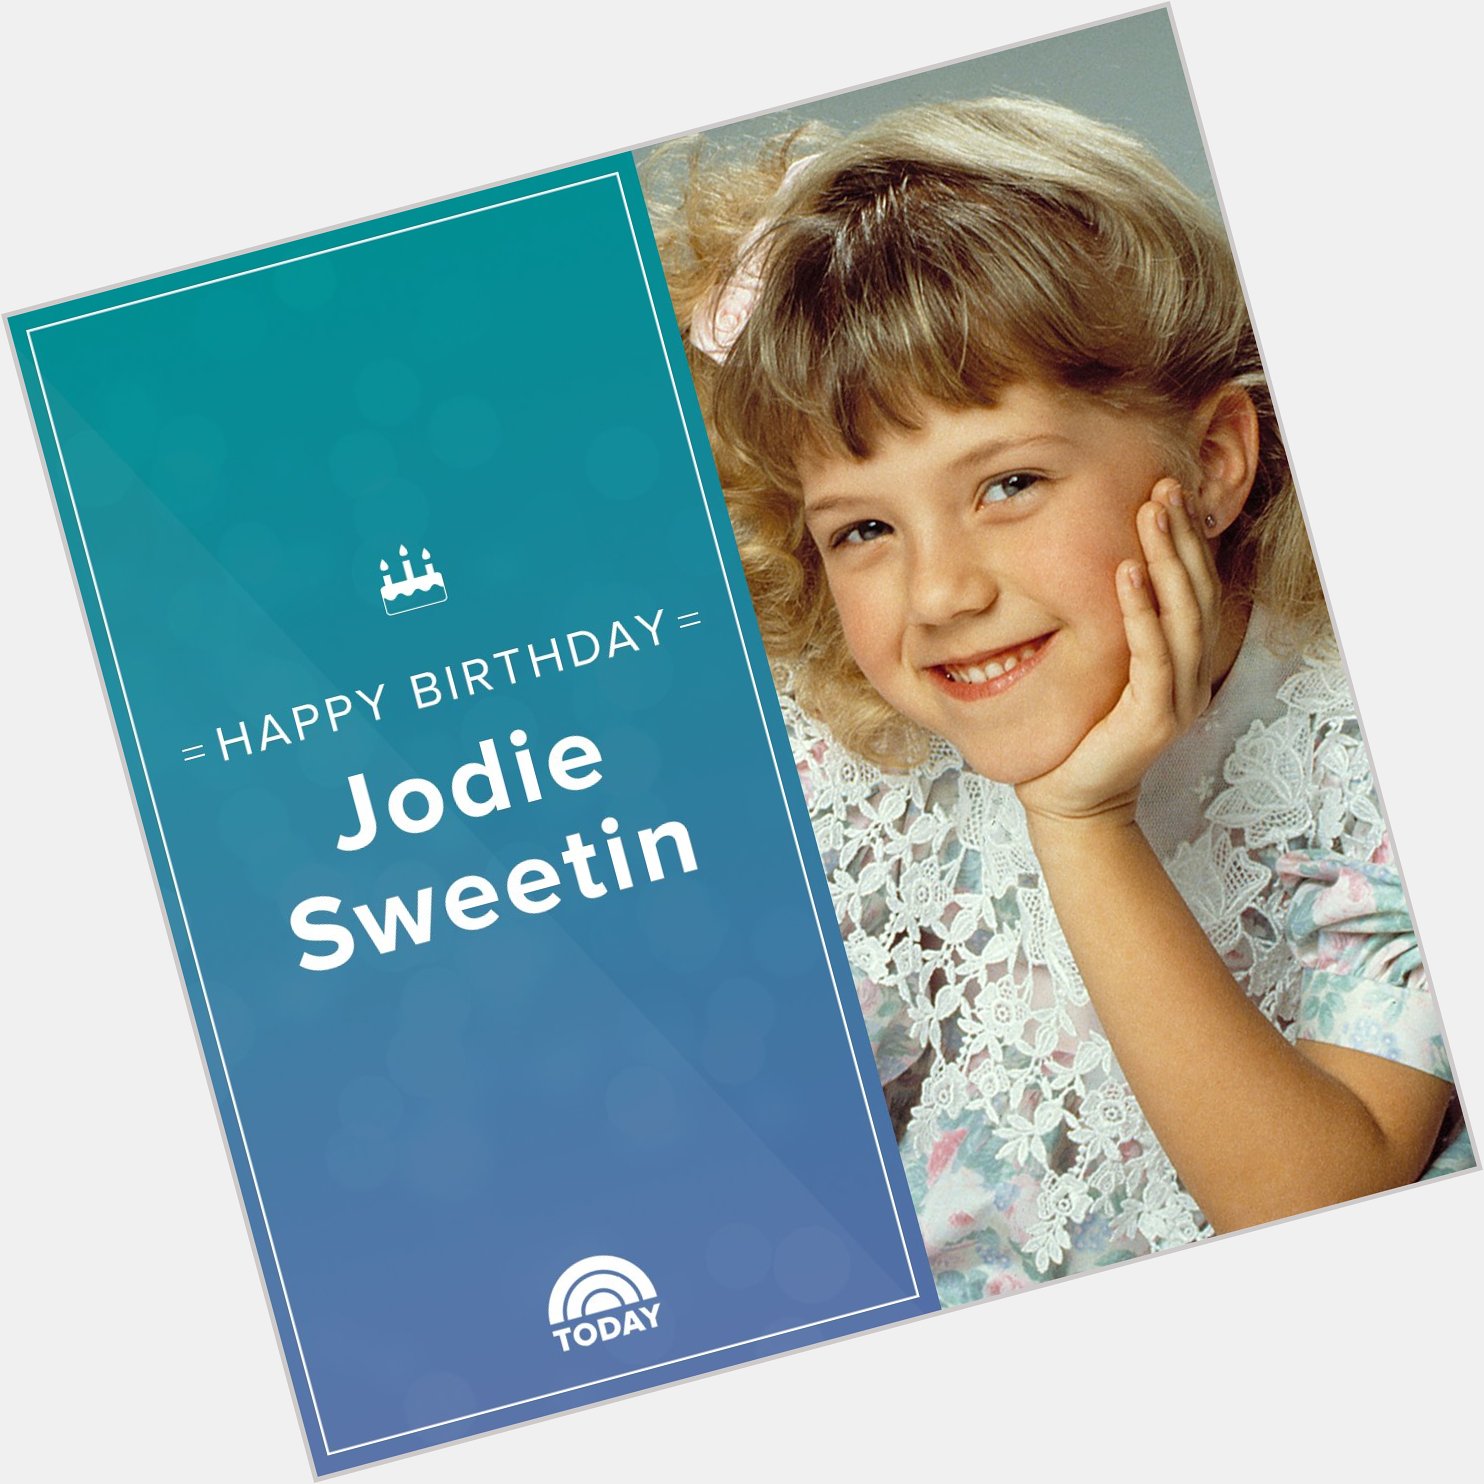 Happy birthday, Jodie Sweetin! 